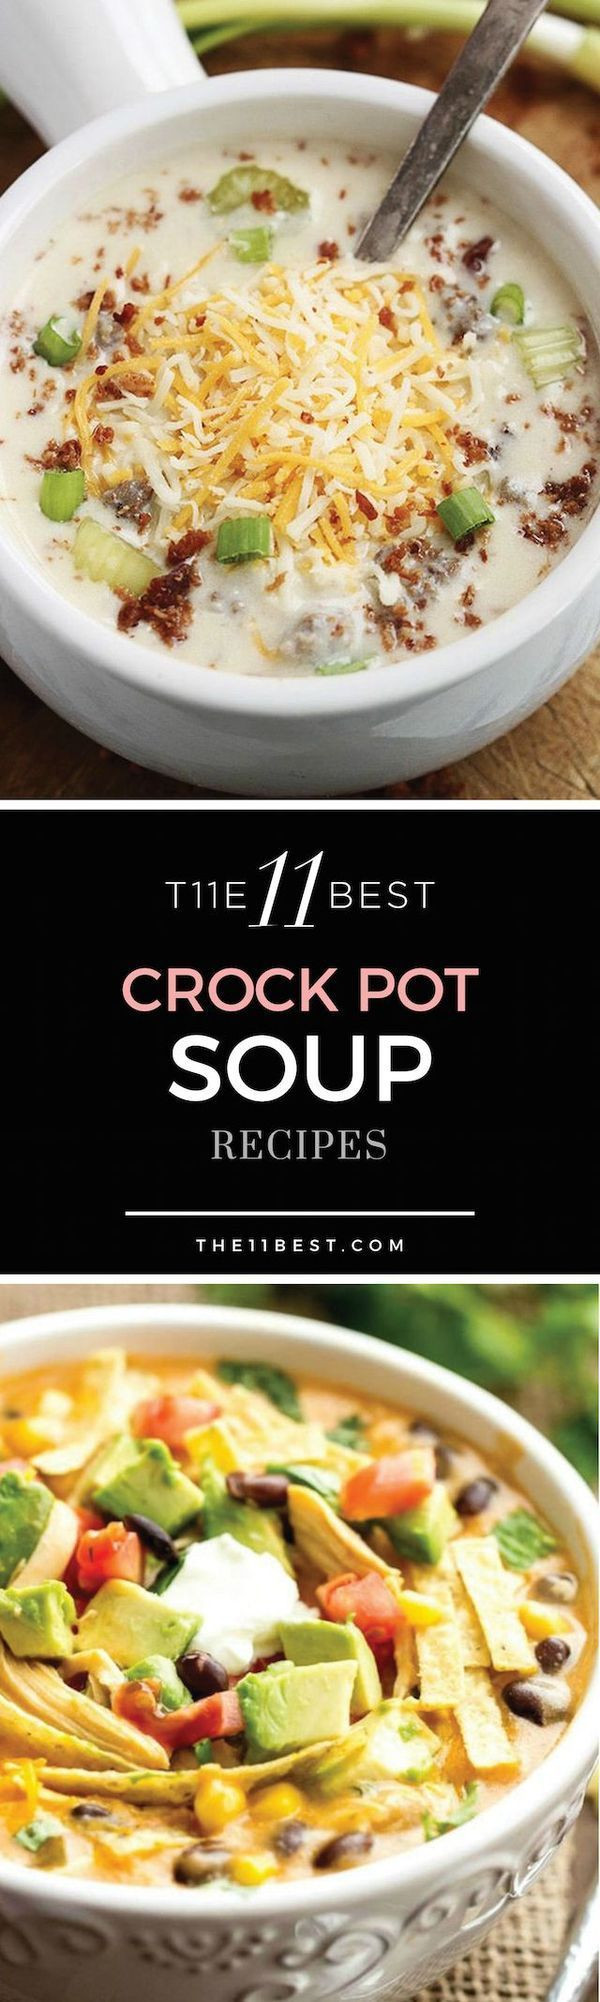 Crock Pot Soups Healthy
 The 11 Best Crock Pot Soup Recipes